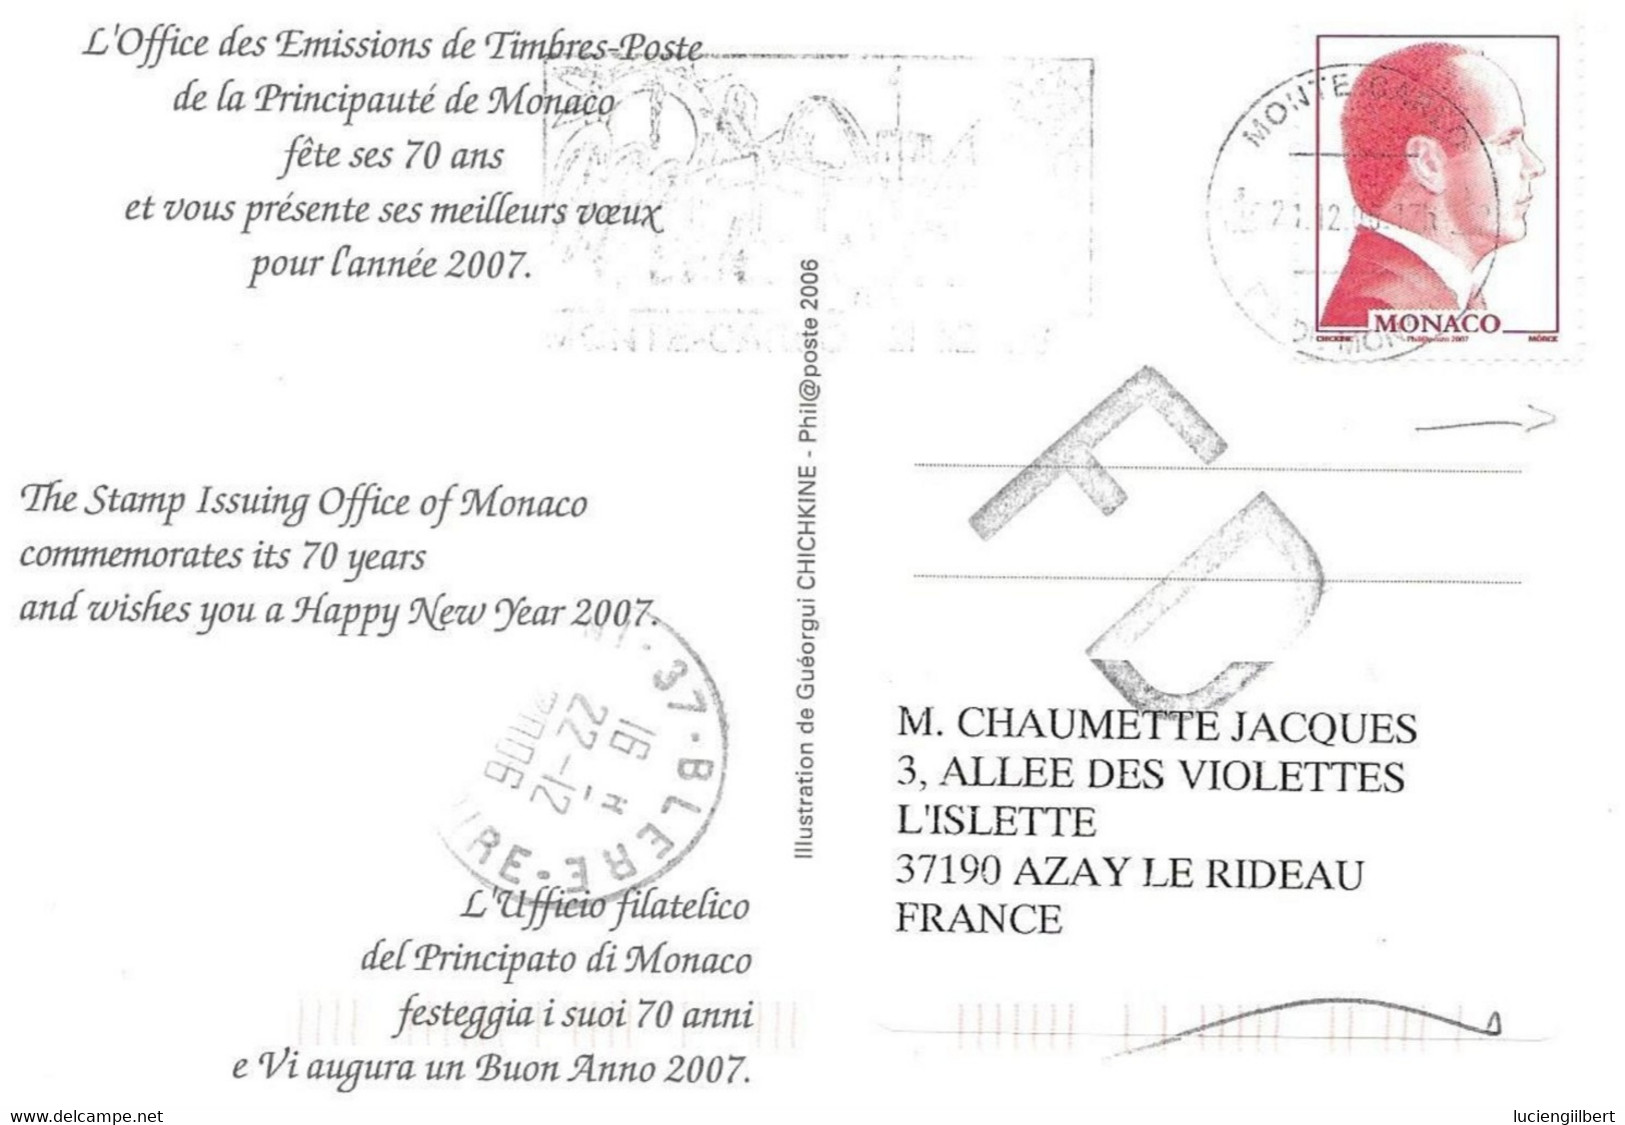 MONACO  -   MONTE CARLO  -   TIMBRE N° 2562 -   TARIF DU 1 10 06 AU 28 2 08 -  -  2006 - GRAVURE S.A.S. PRINCE ALBERT II - Cartas & Documentos